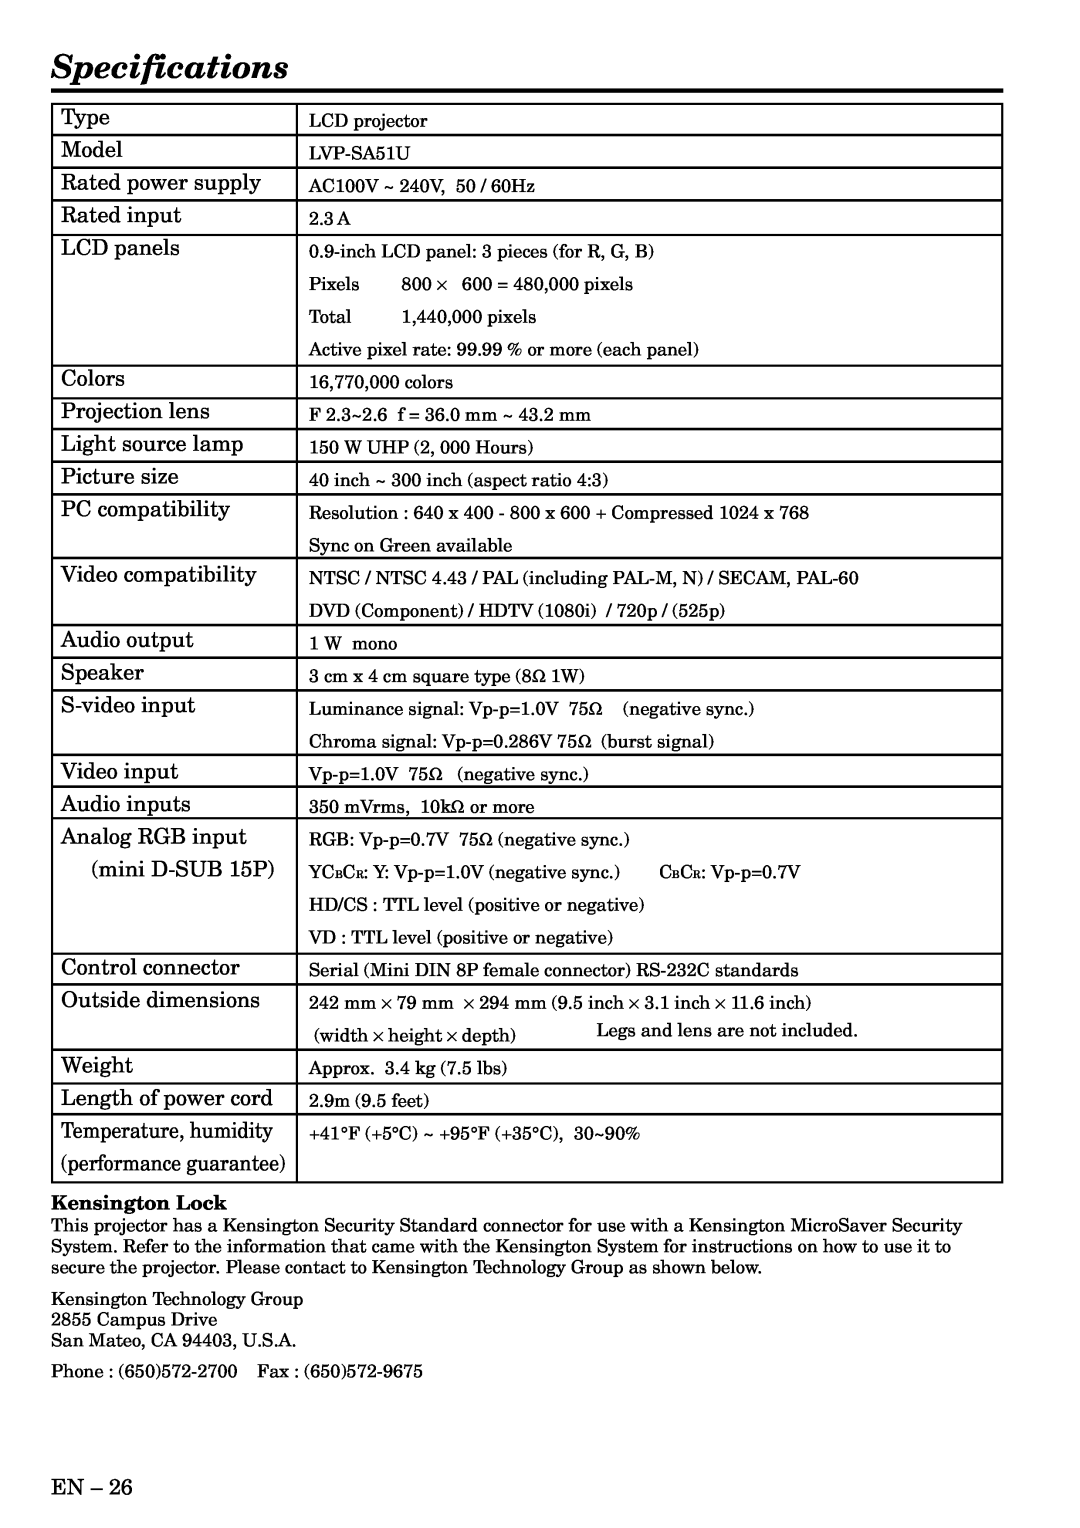 Mitsubishi Electronics LVP-SA51U user manual Specifications, Kensington Lock 